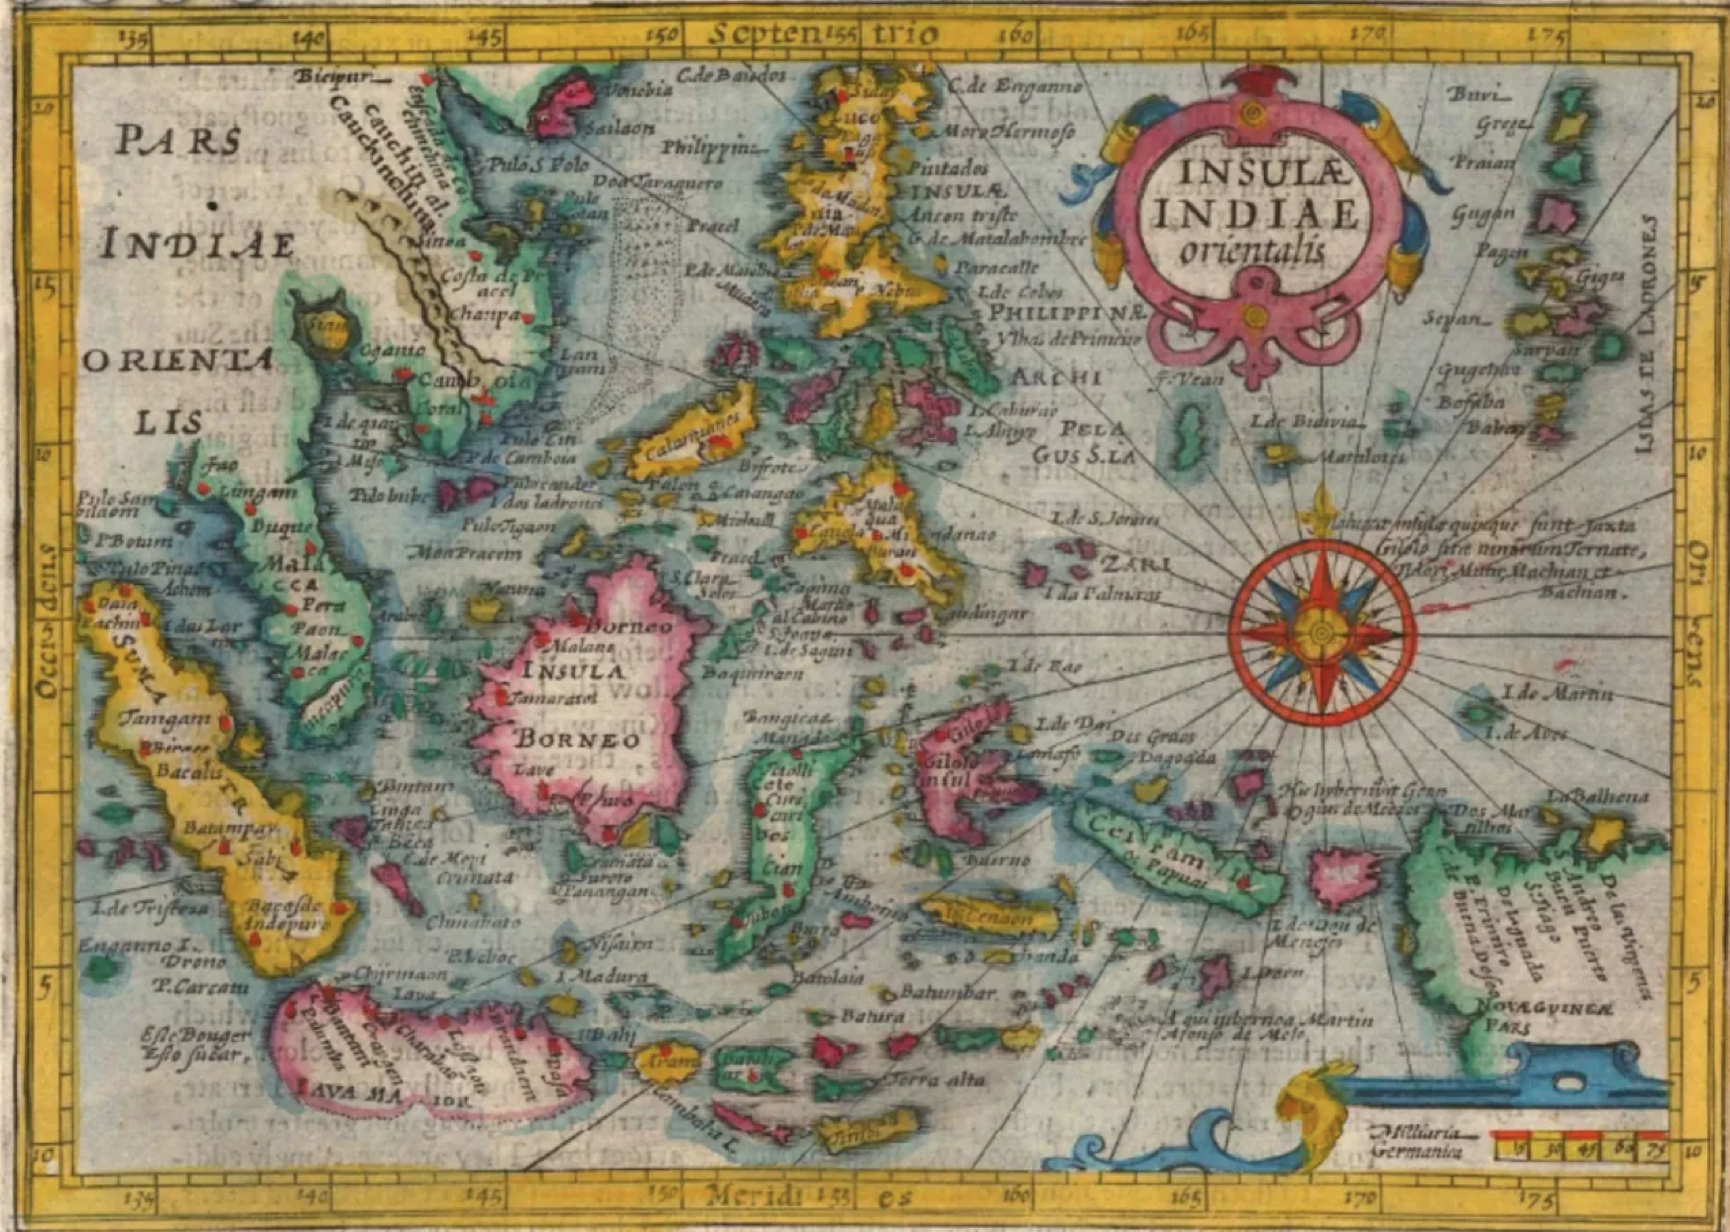 Insulae Indiae Orientalis, 1625, Cartographer. Samuel Purchas, The Map House of London